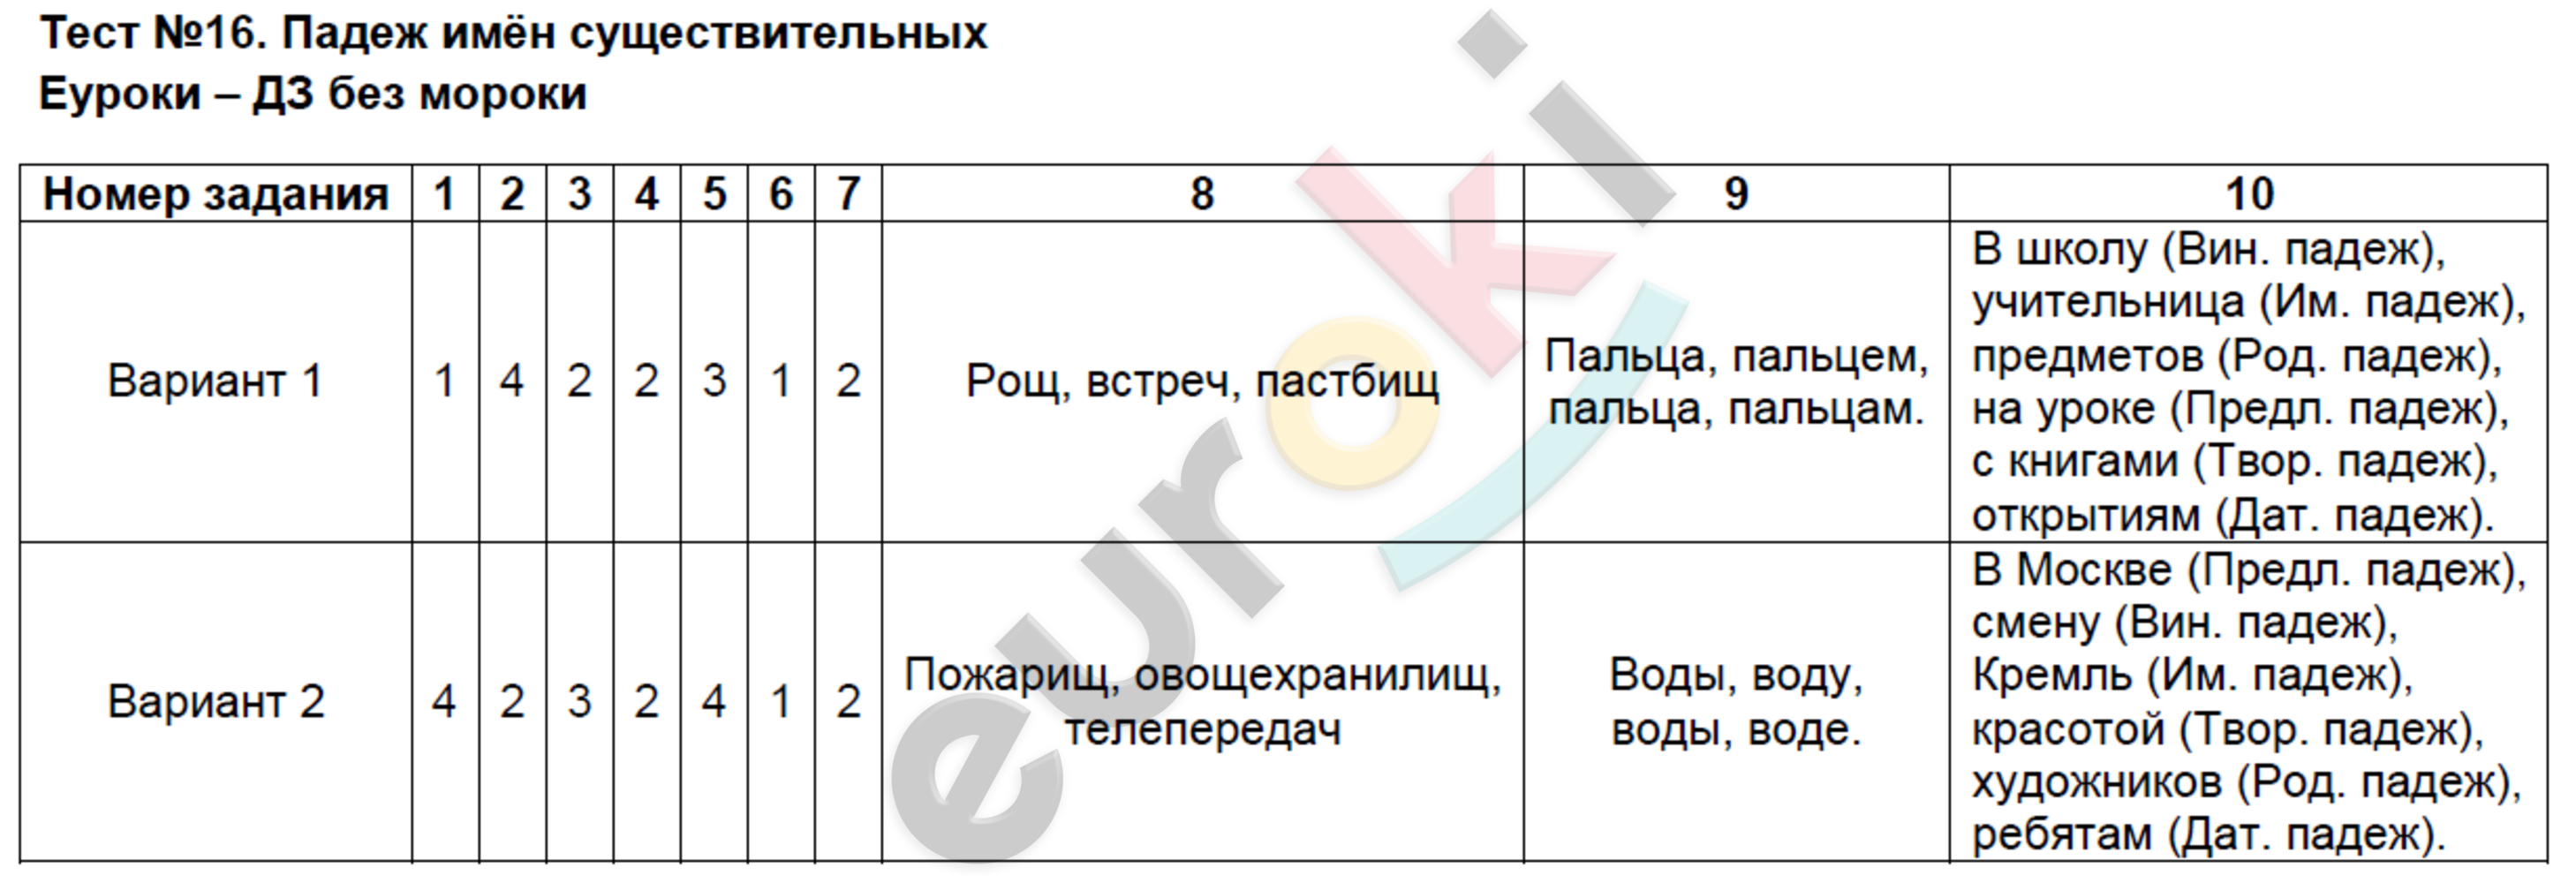 Тест 16 по русскому языку